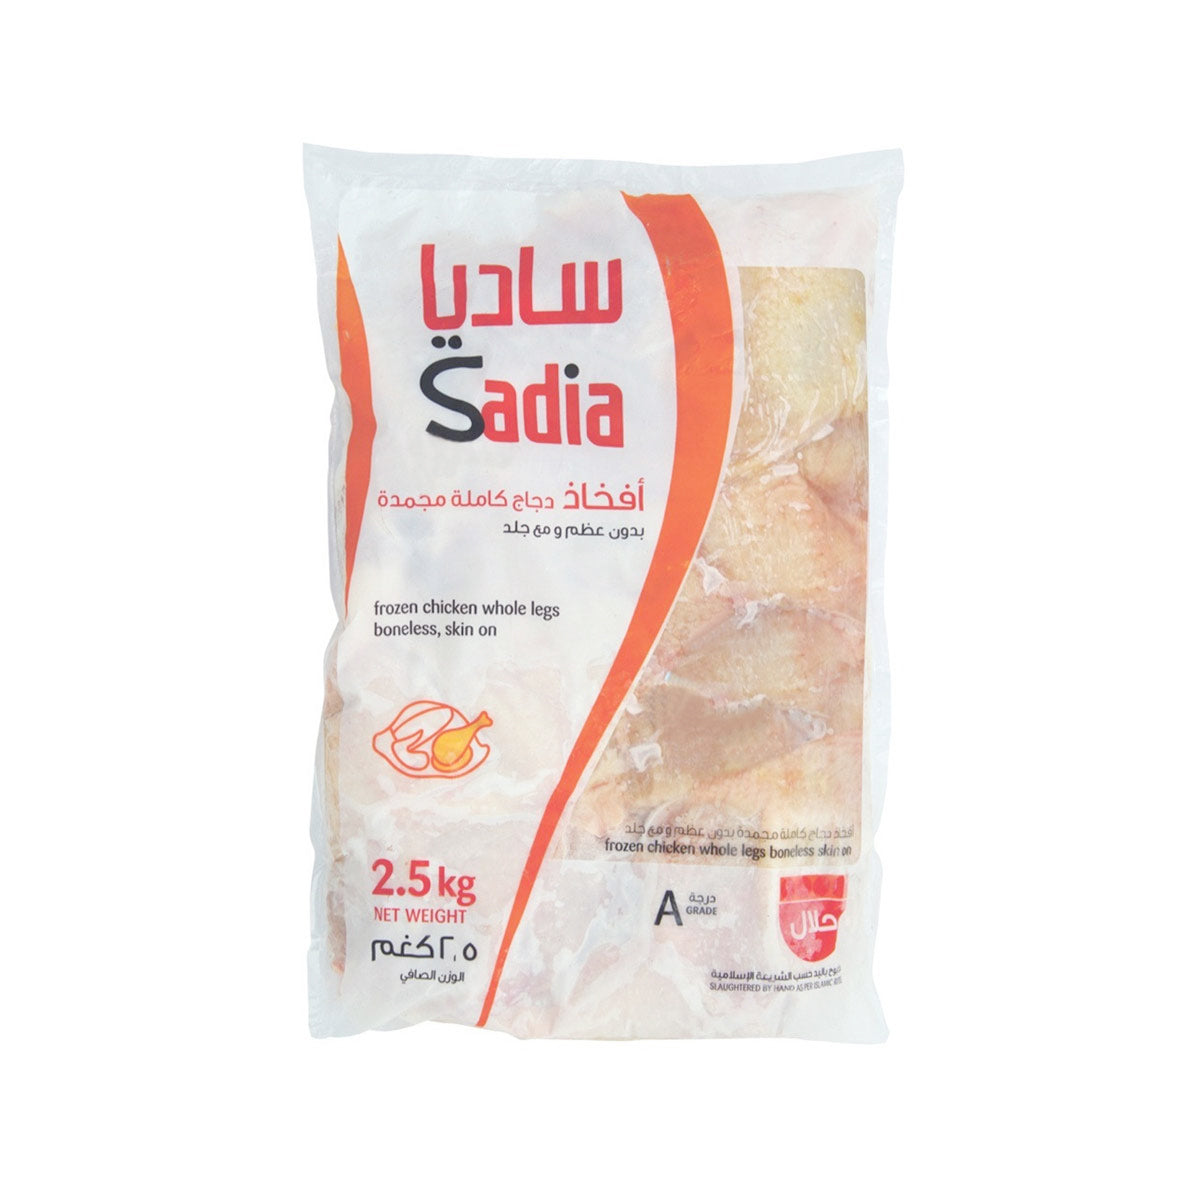 Whole Chicken Legs Boneless, Skin-On 2.5kg - Sadia